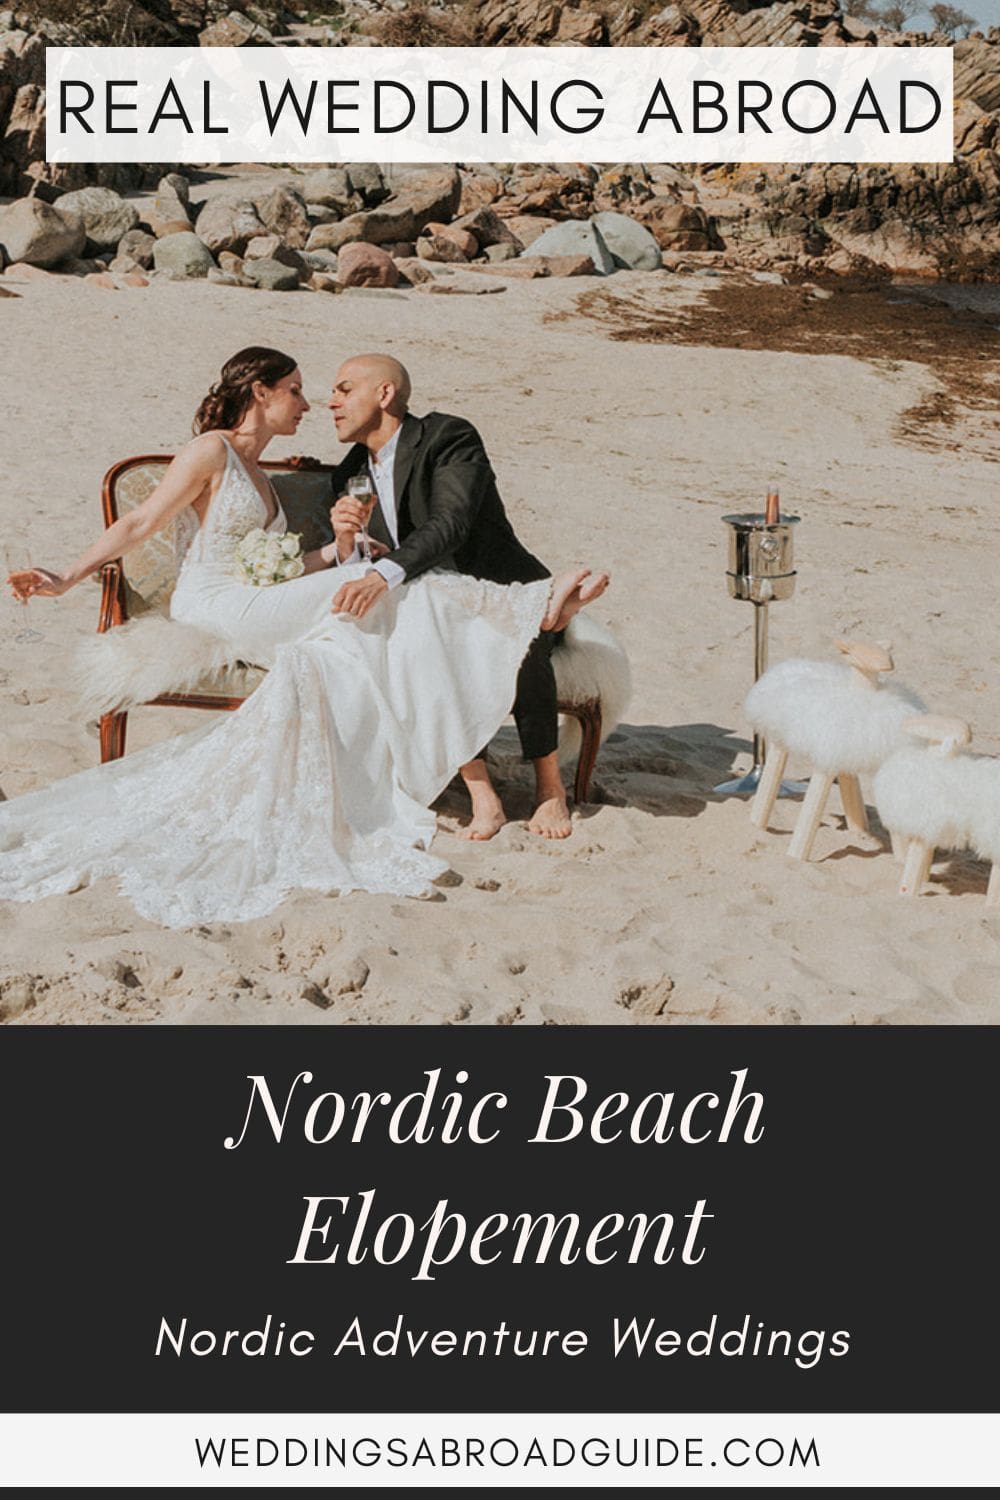 Nordic Adventure Weddings | European Elopement Wedding Package, Denmak